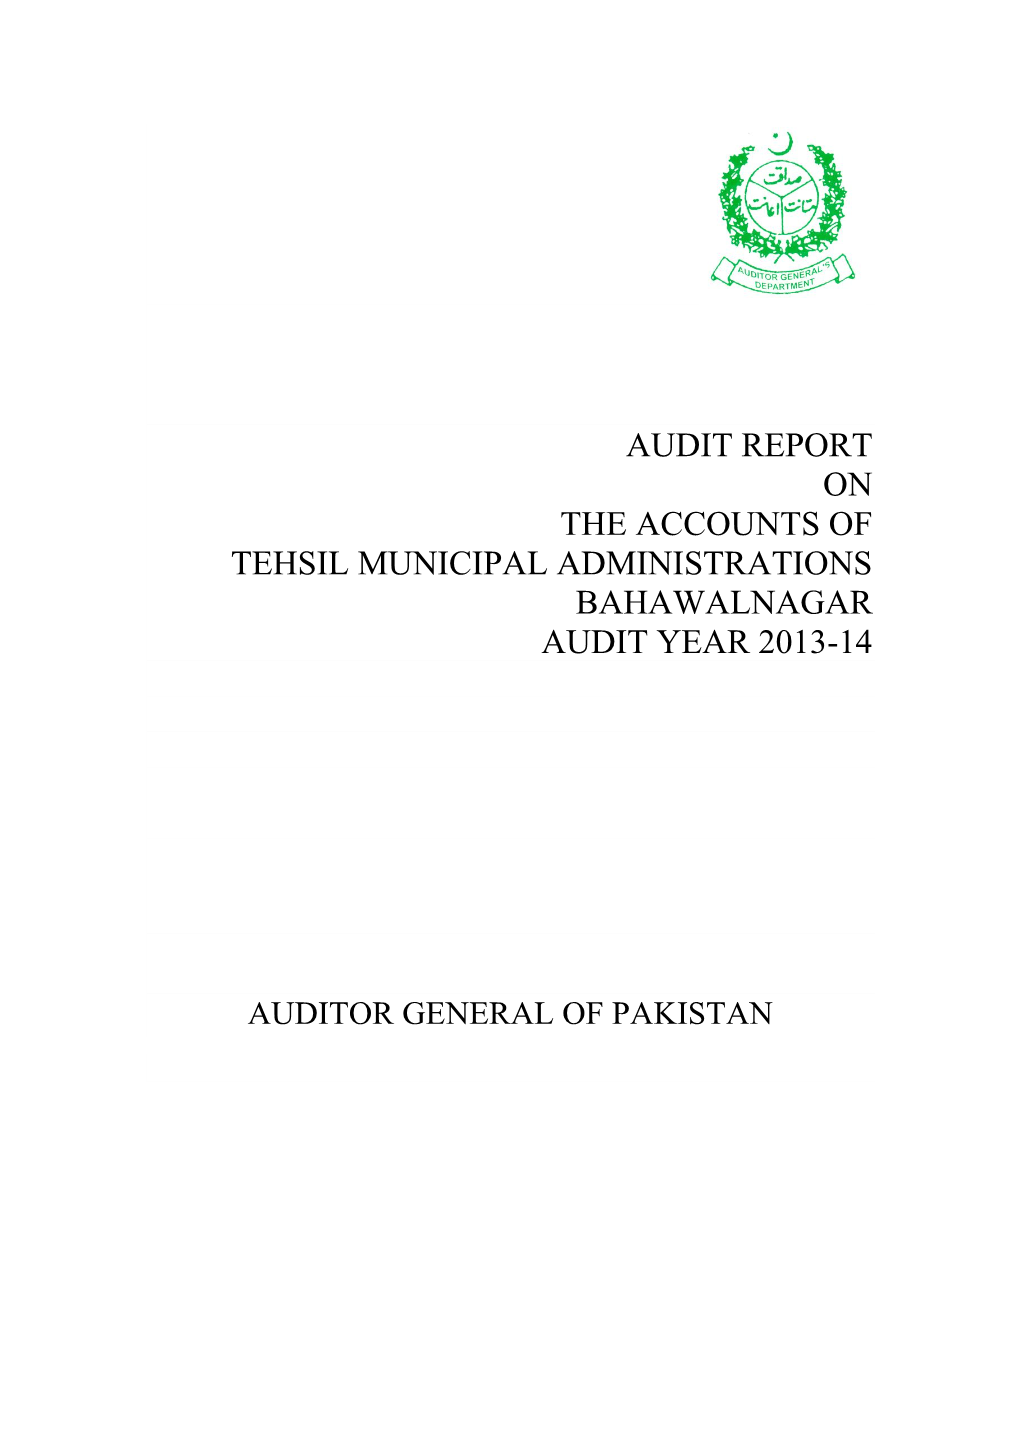 Audit Report on the Accounts of Tehsil Municipal Administrations Bahawalnagar Audit Year 2013-14